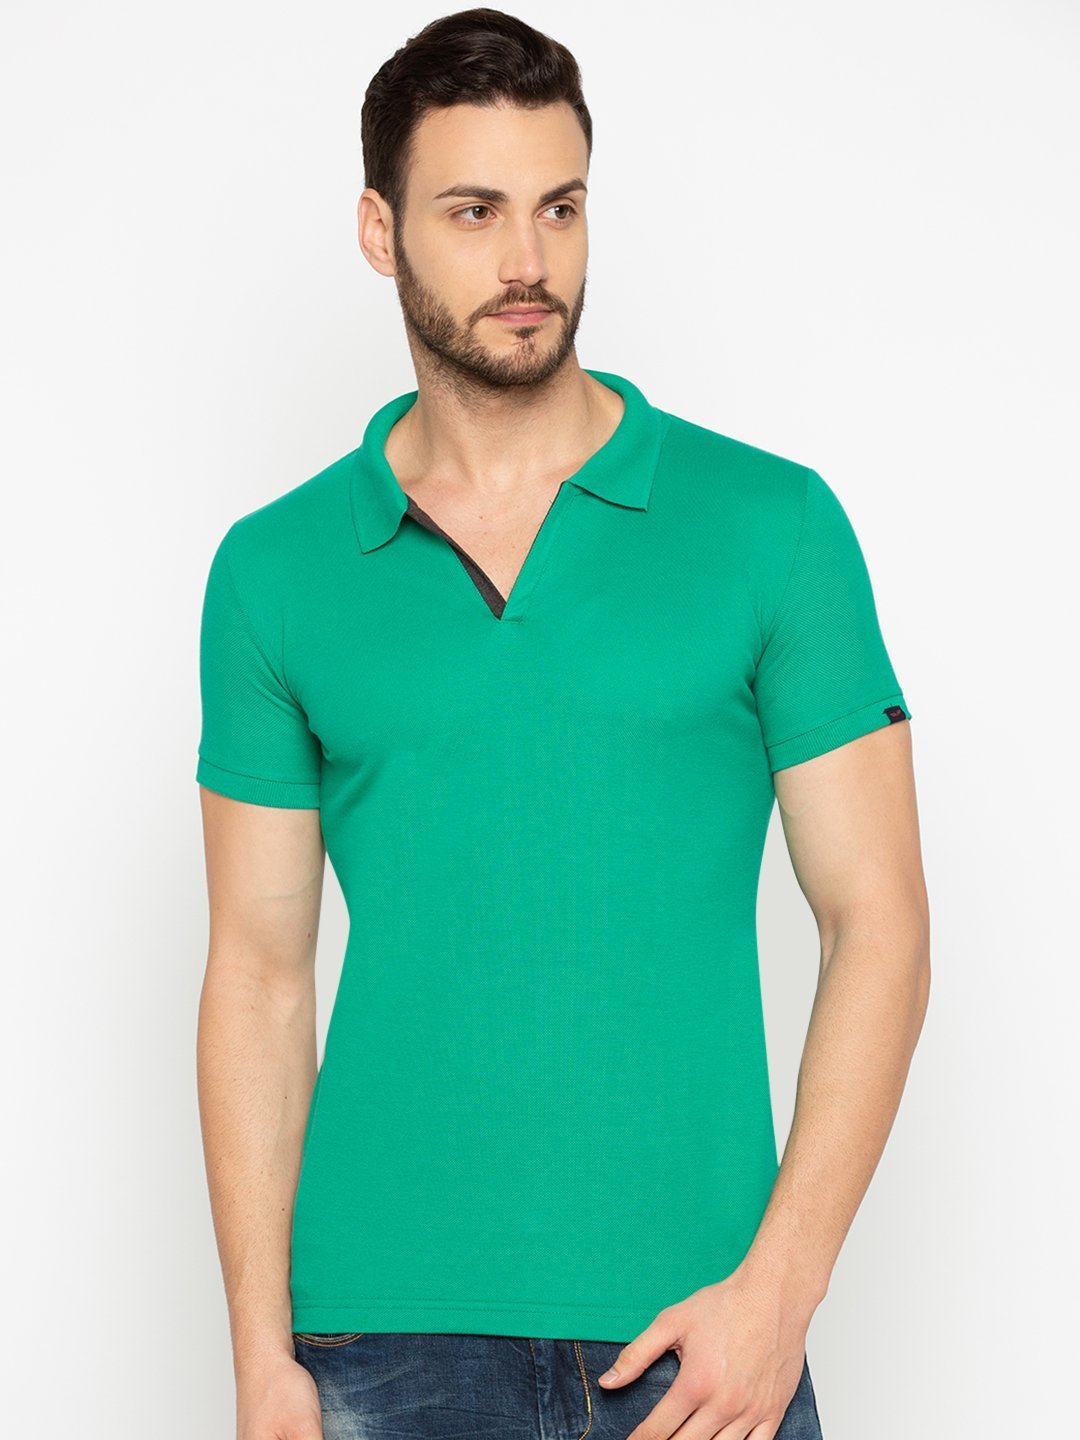 Express Green polo t shirt